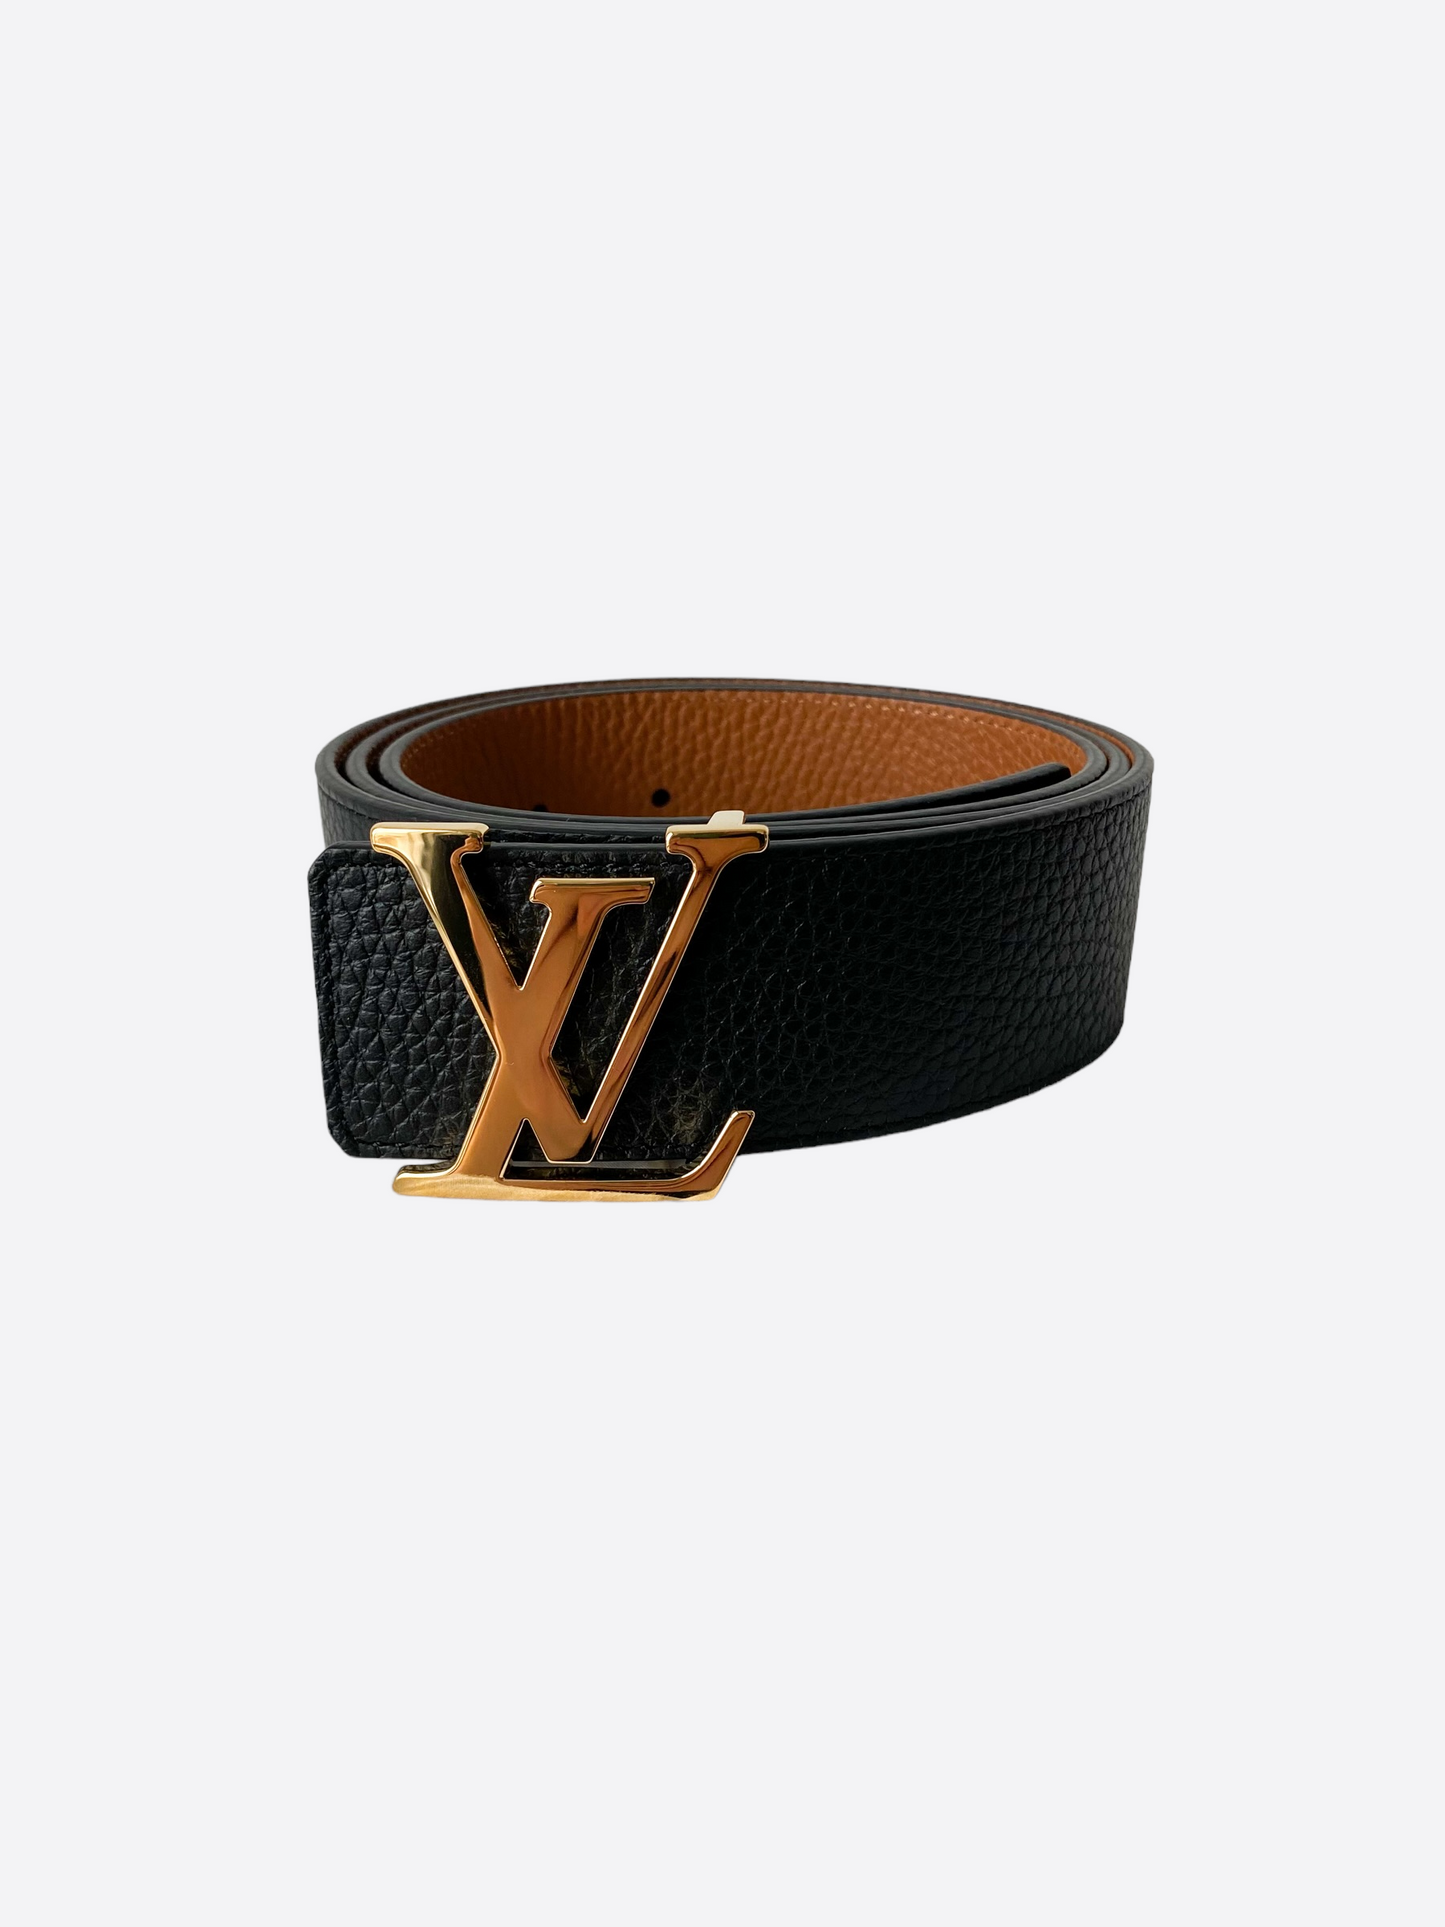 Louis Vuitton Dark Brown Leather Initiales Belt 95CM Louis Vuitton